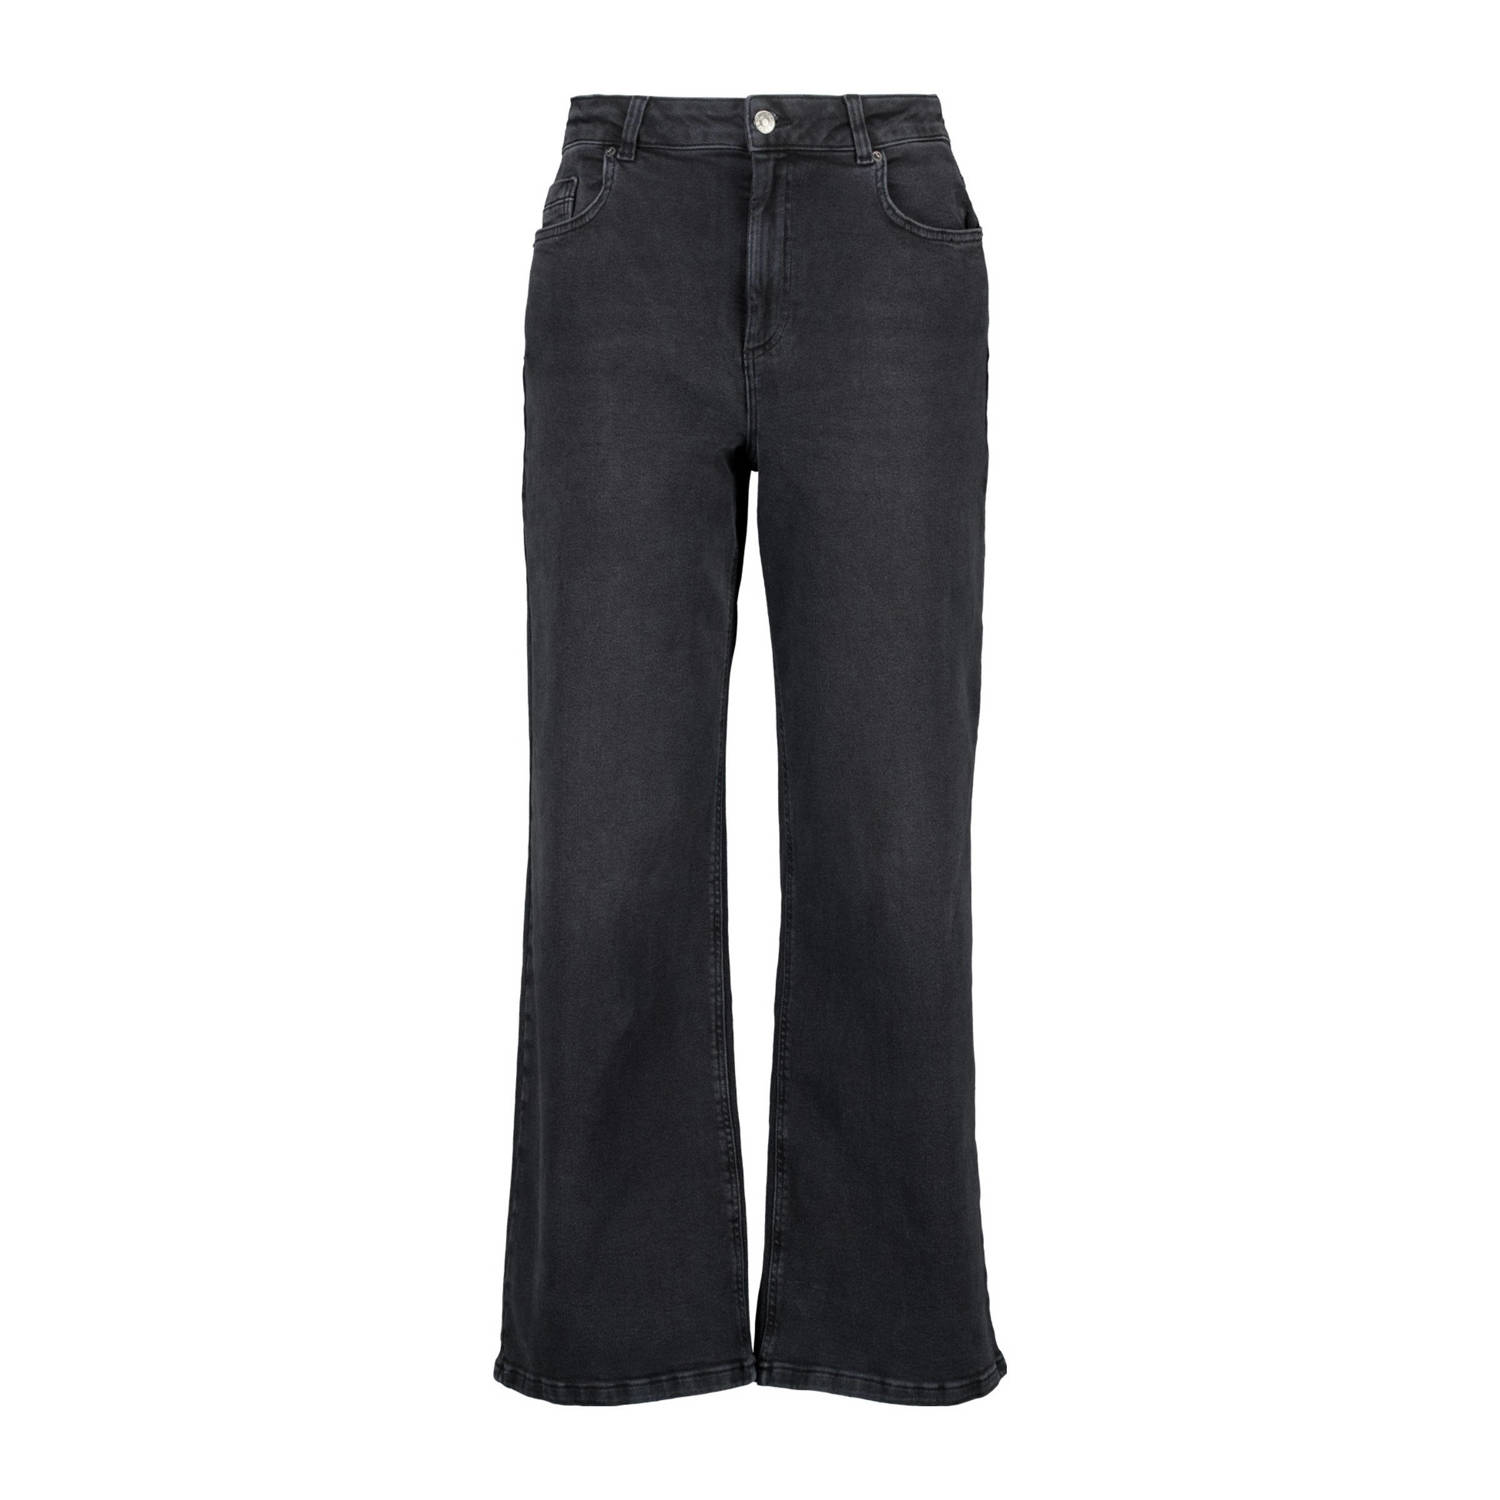 MS Mode wide leg jeans grey denim